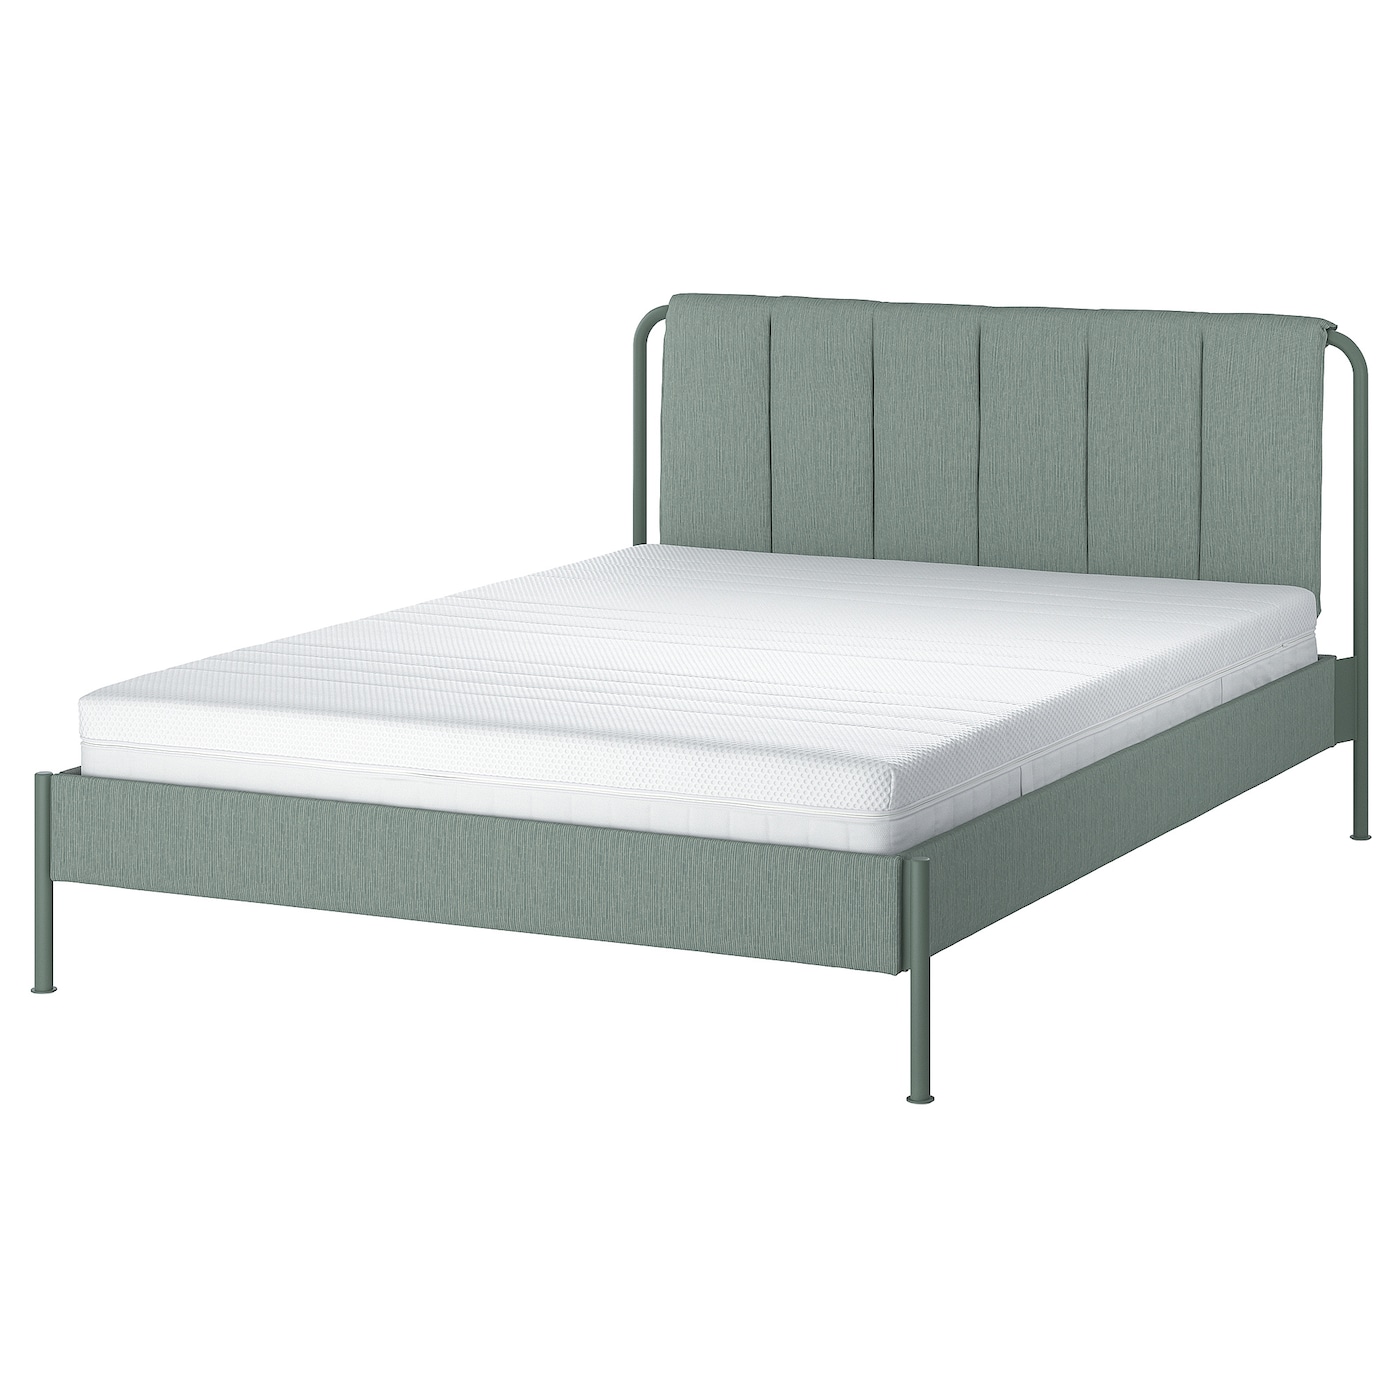 Каркас кровати мягкий с матрасом - IKEA TÄLLÅSEN/TALLASEN, 200х140 см, матрас средне-жесткий, серо-зеленый, ТЭЛЛАСОН ИКЕА